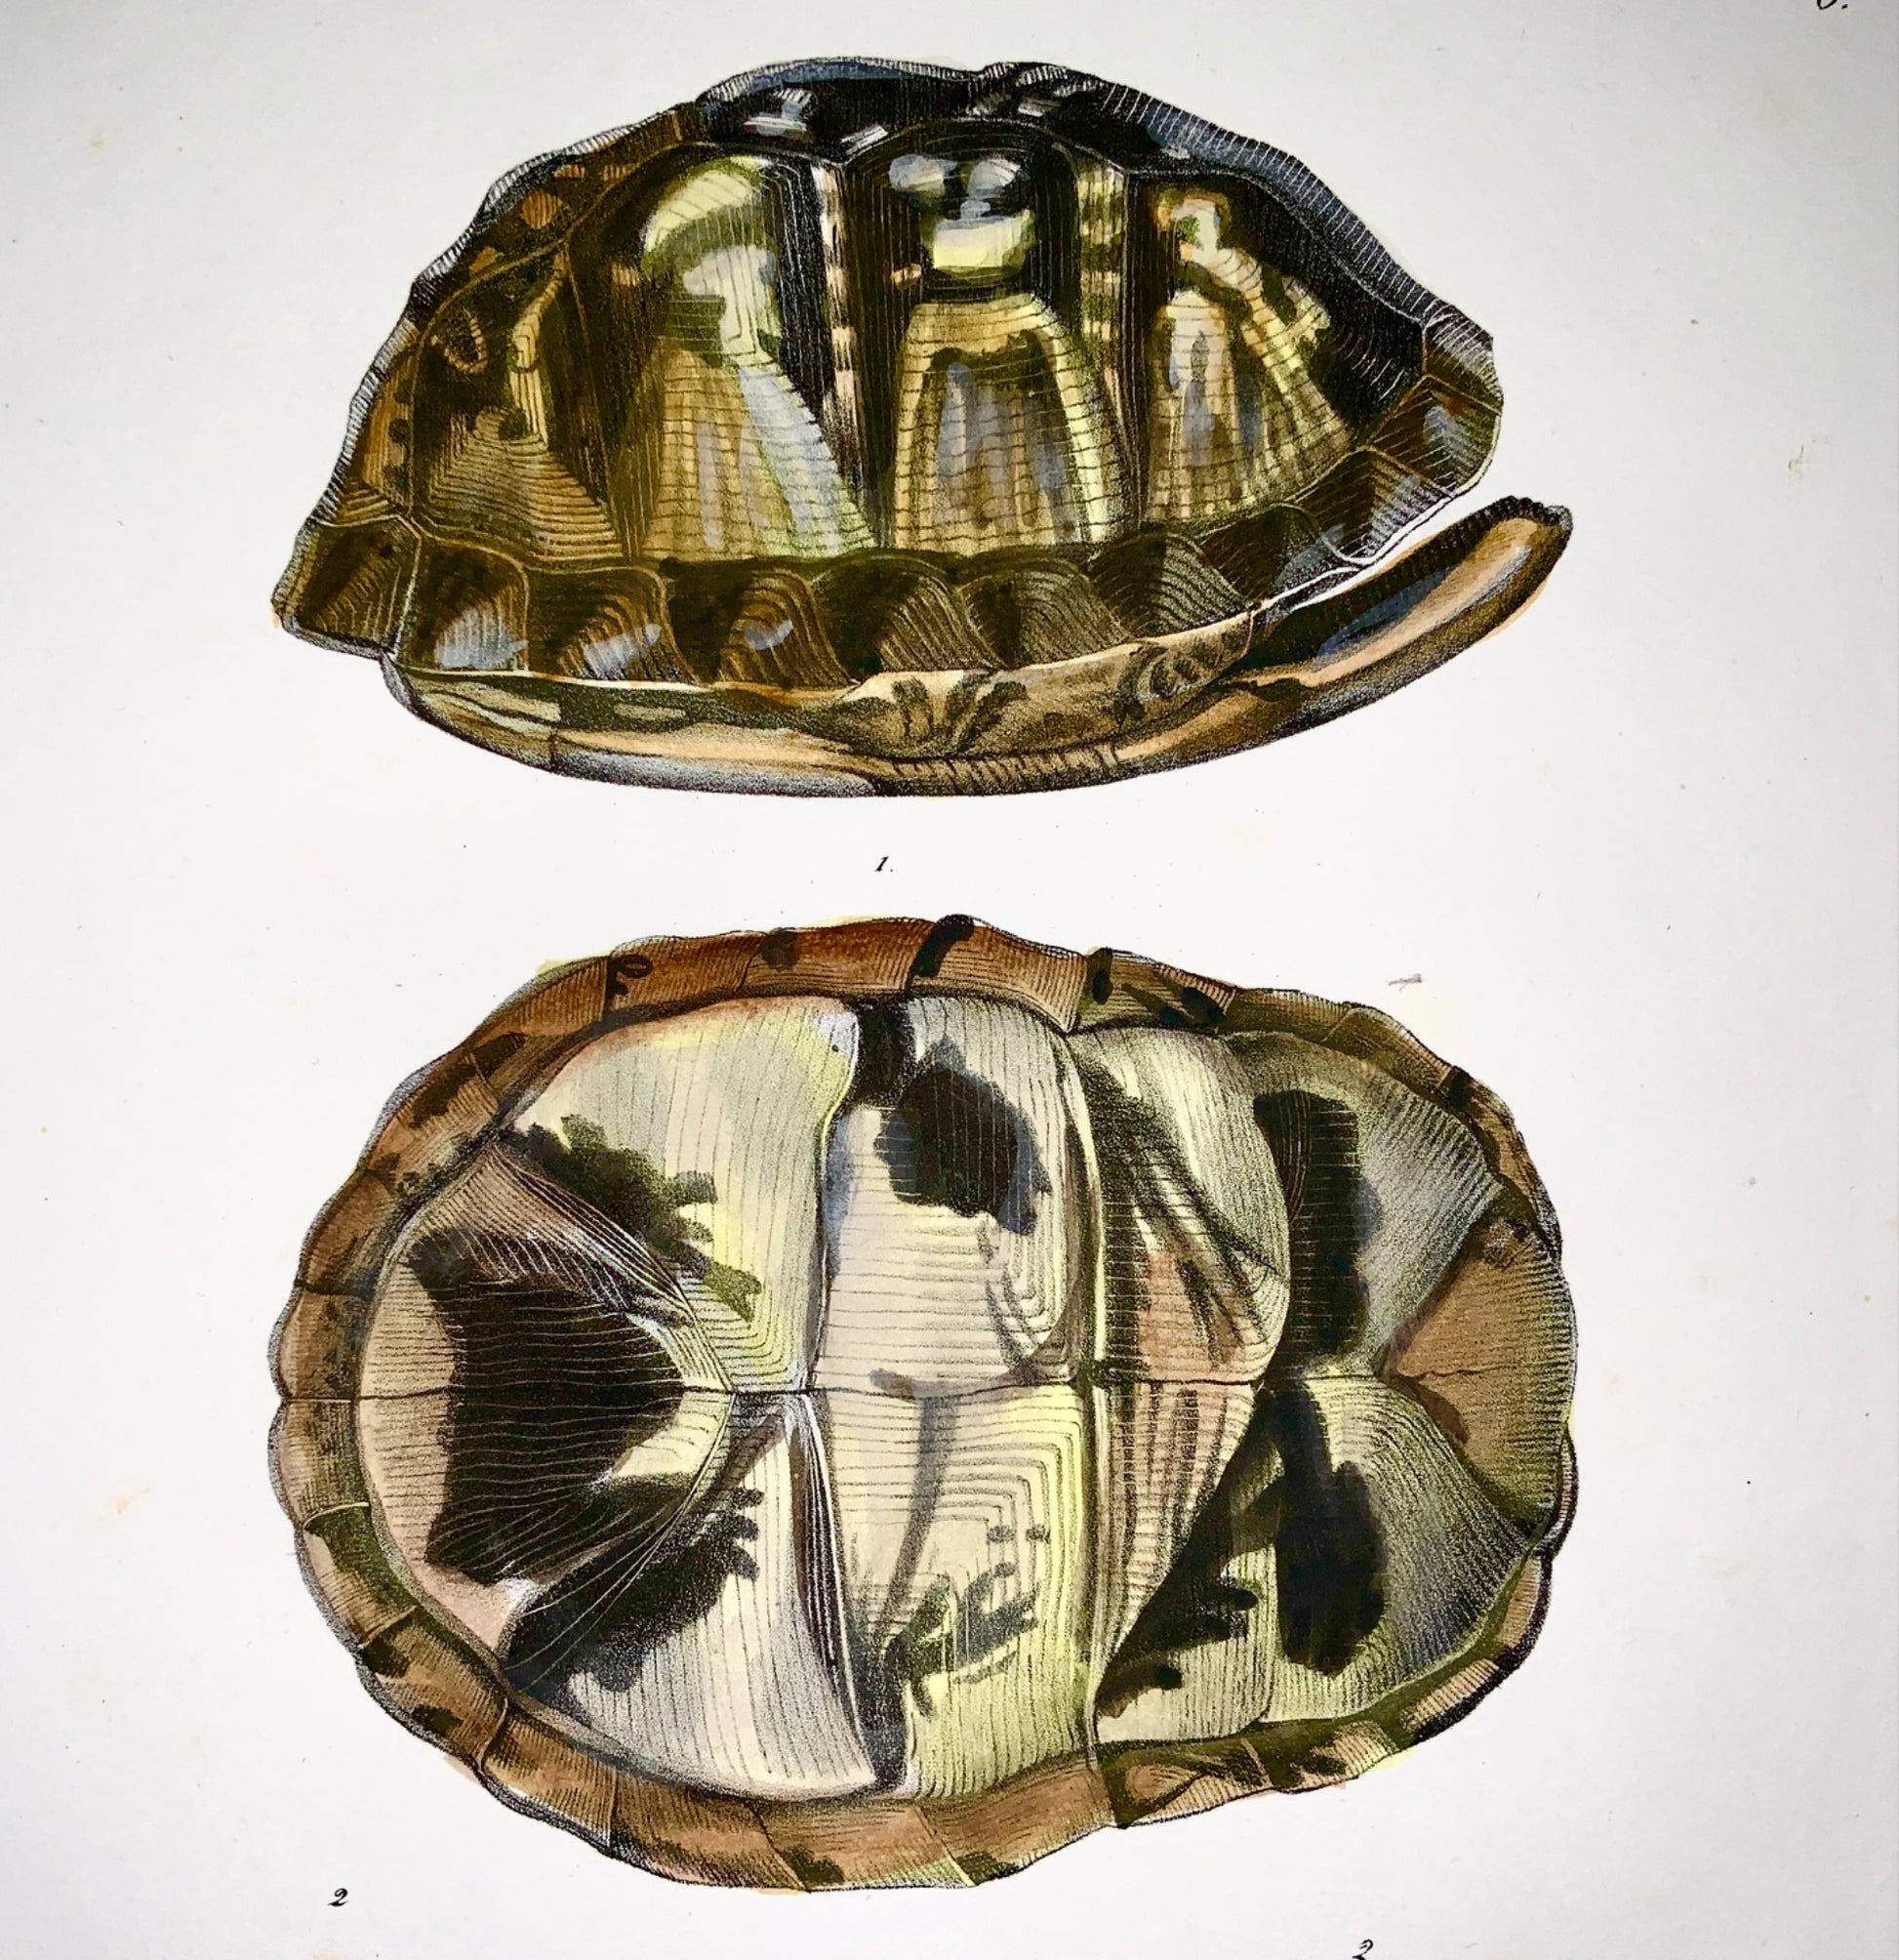 1833 H.R. Schinz (b1777) - BOX TURTLE - Hand colour stone lithograph - Amphibian